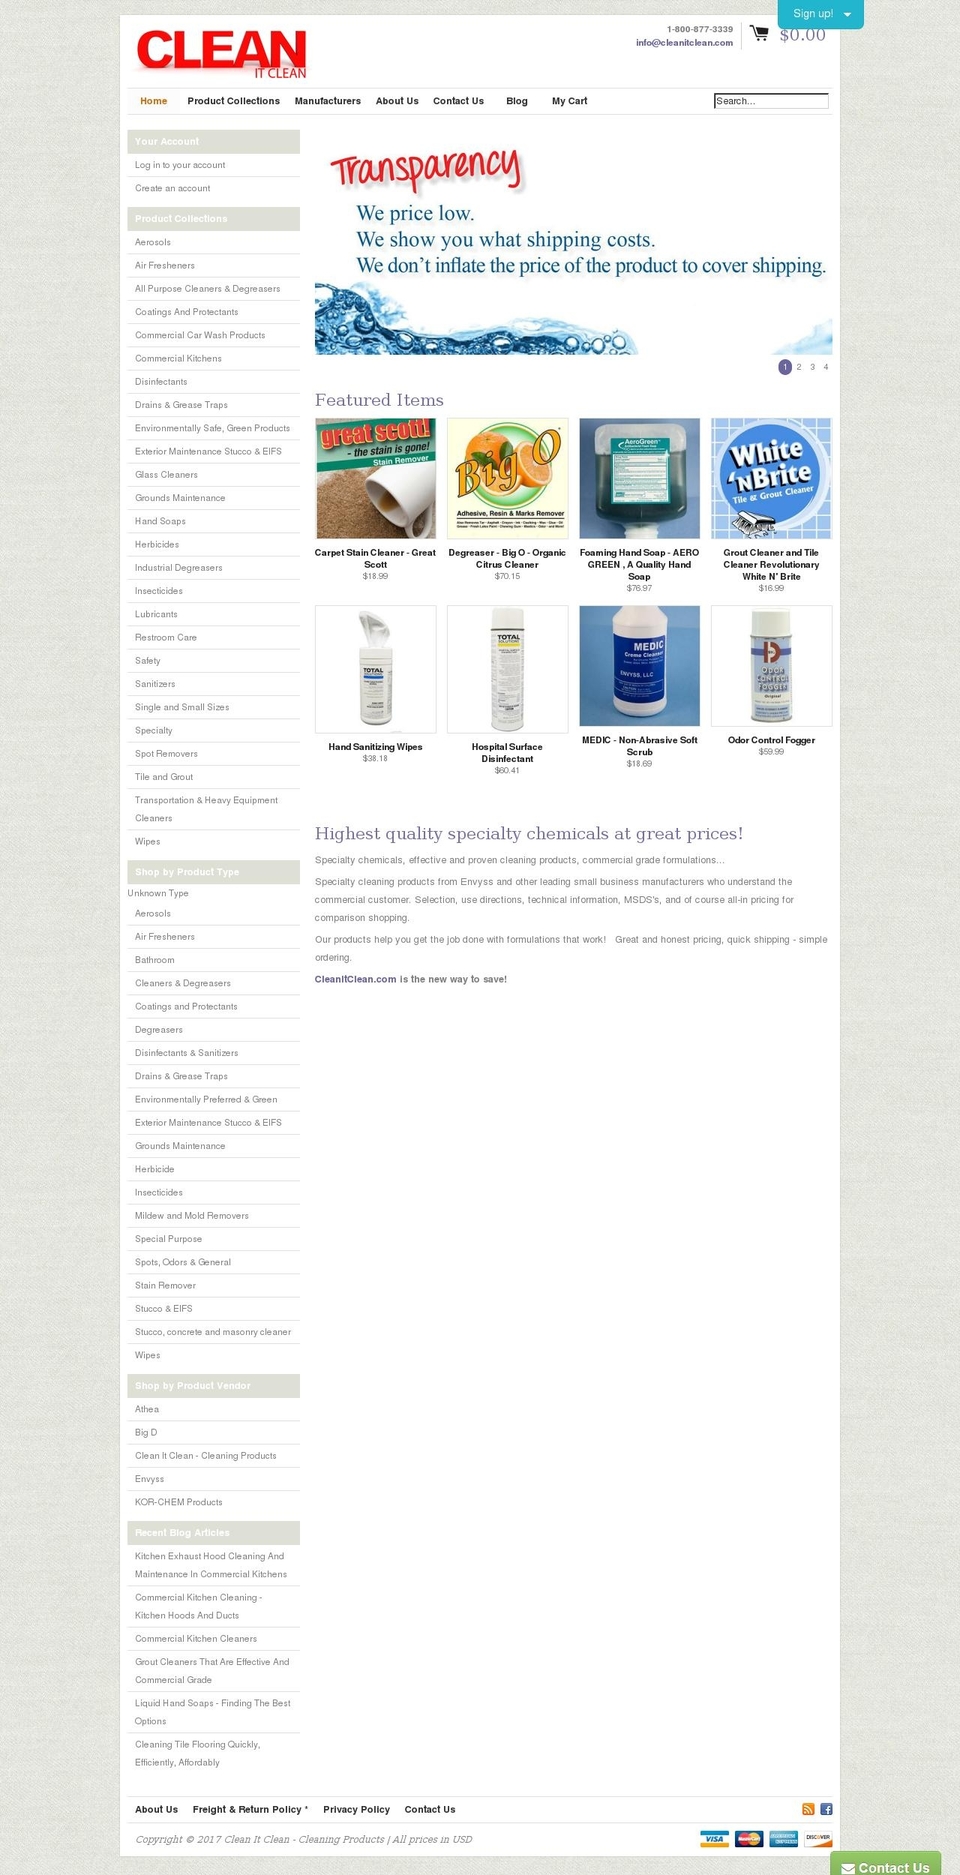 cleanitclean.com shopify website screenshot